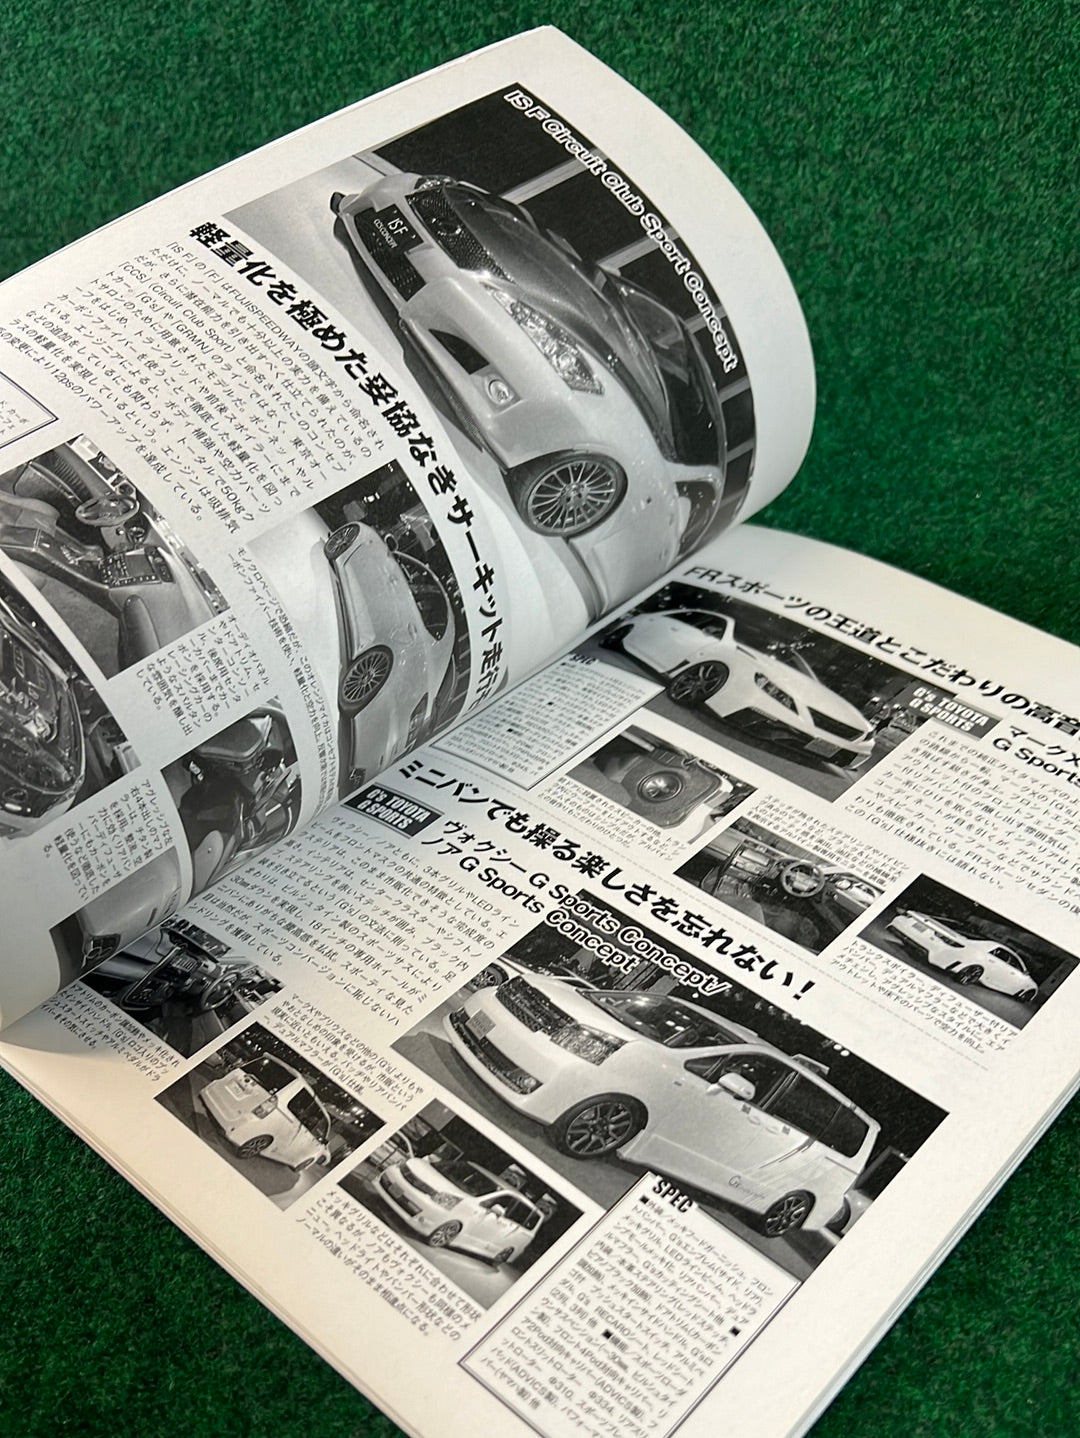 Hachiroku! - Toyota Corolla AE86 “There is Soul Sports” Magazine